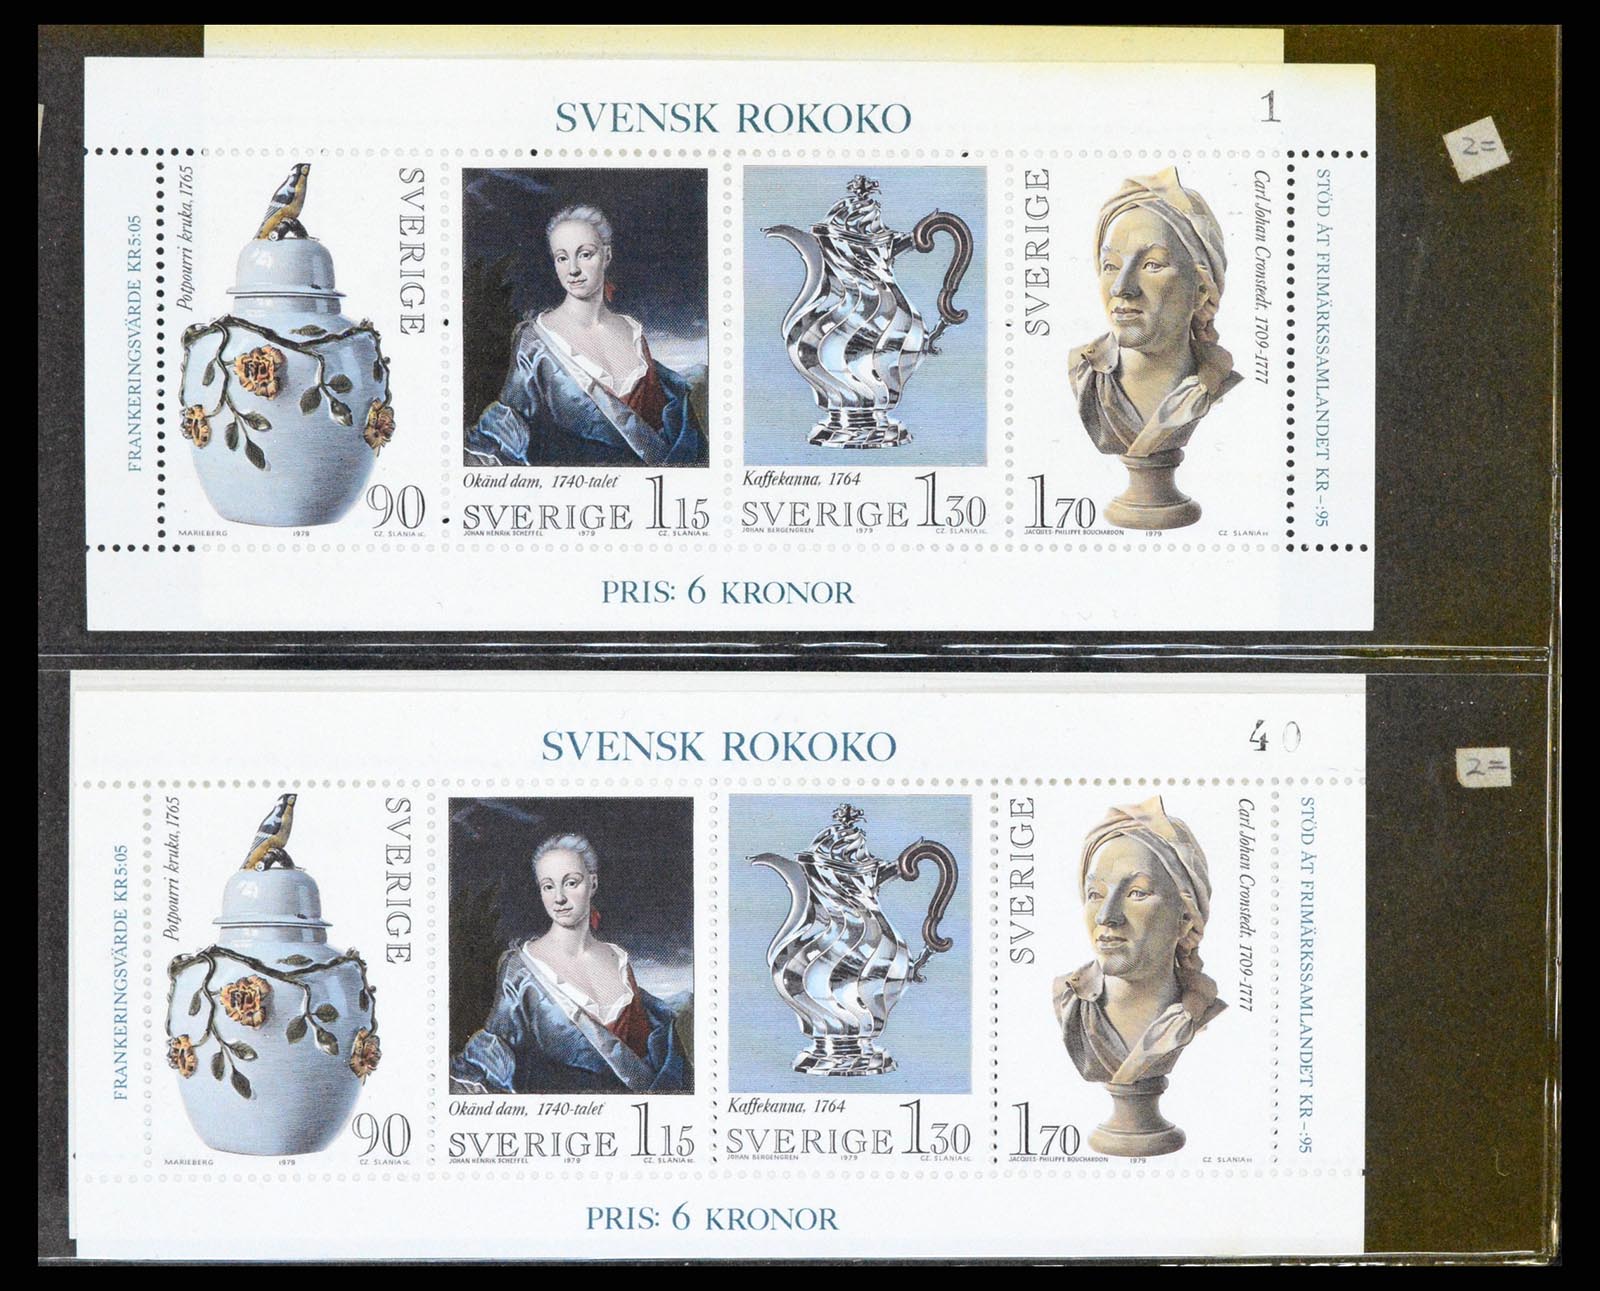 37341 001 - Stamp collection 37341 Sweden stamp booklets.